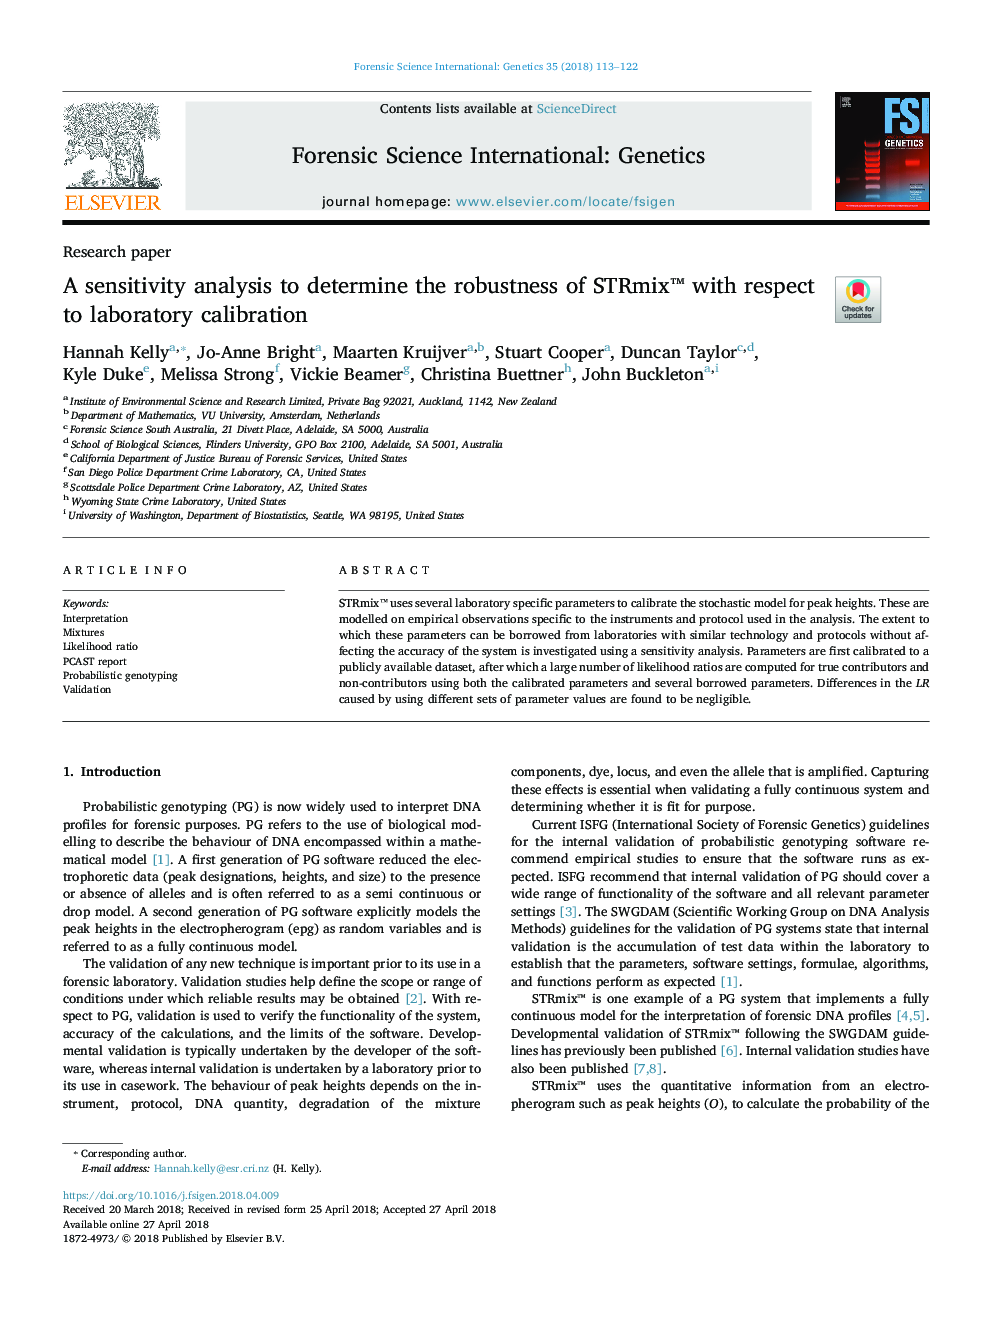 A sensitivity analysis to determine the robustness of STRmixâ¢ with respect to laboratory calibration